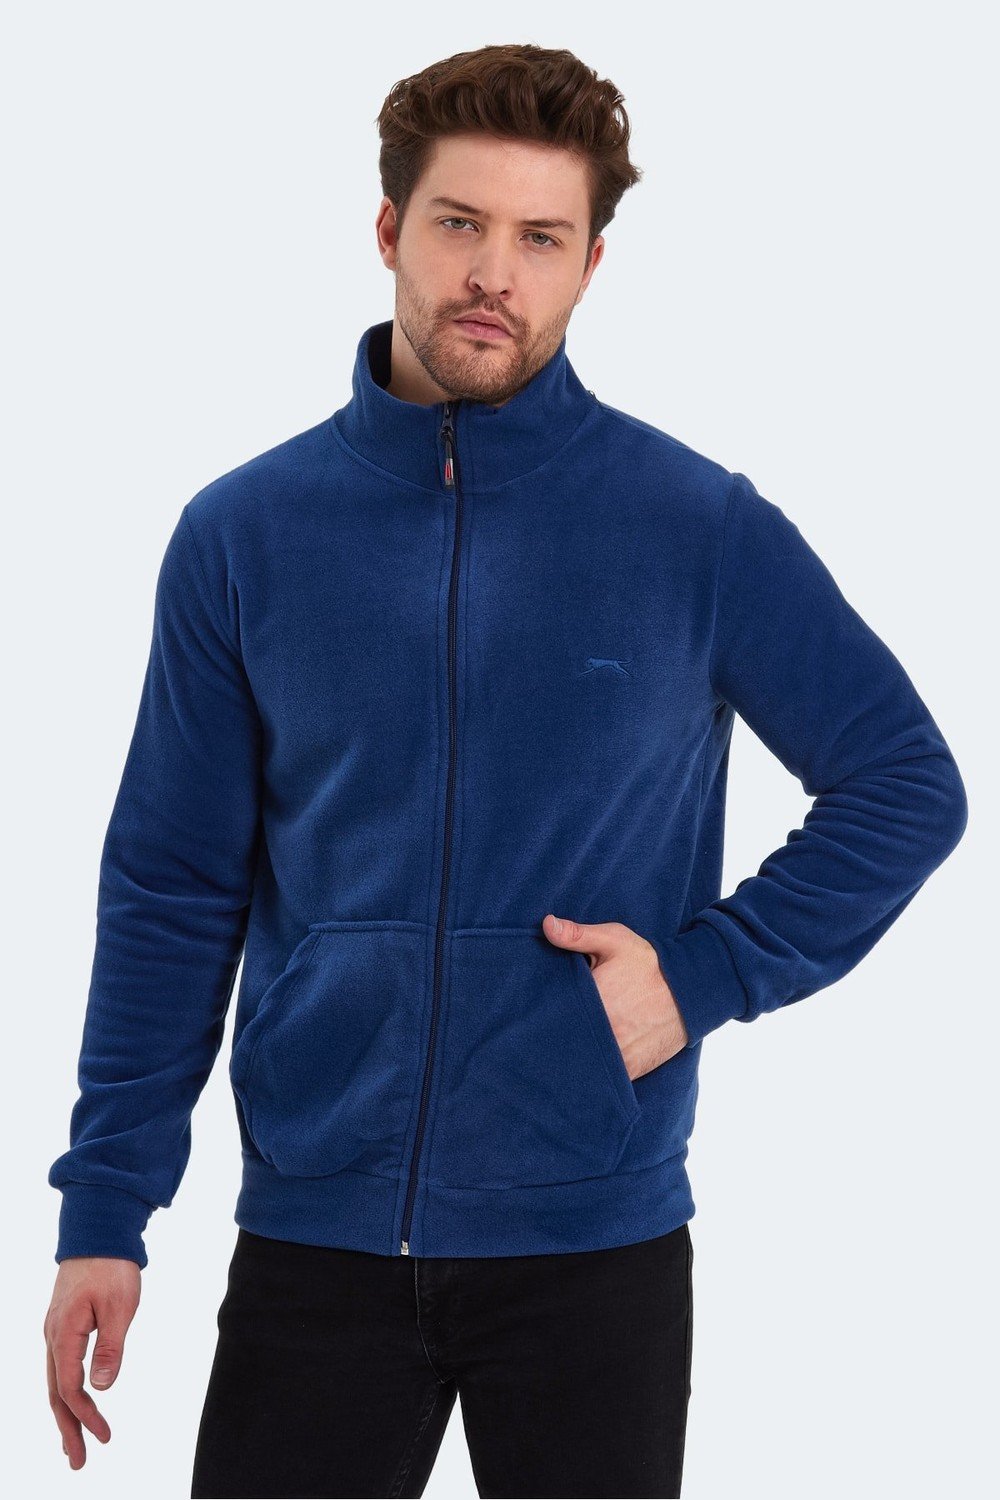 Slazenger Sports Sweatshirt - Dark blue - Regular fit